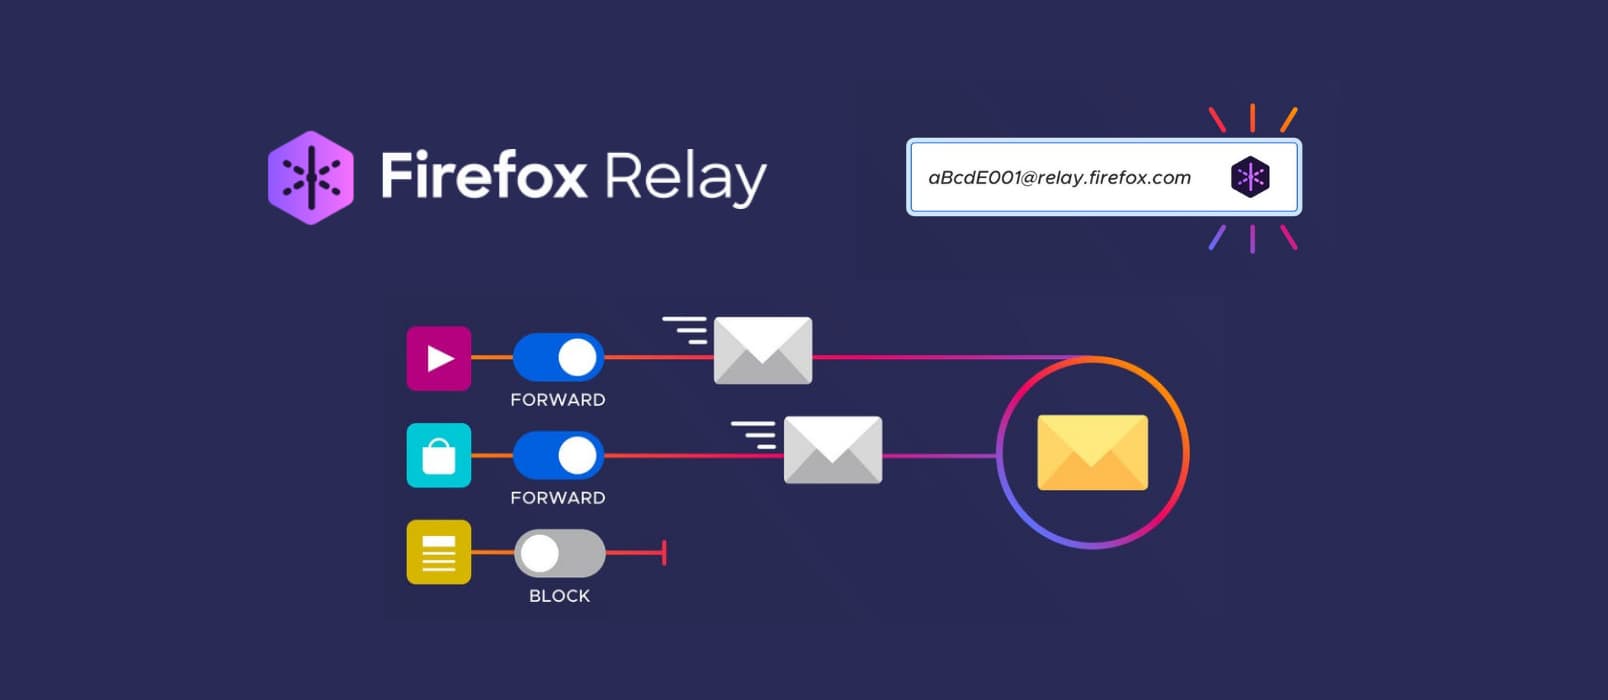 Firefox Relay - 免费提供 5 个临时邮箱地址，用来转发邮件，扩展算半成品？ 1